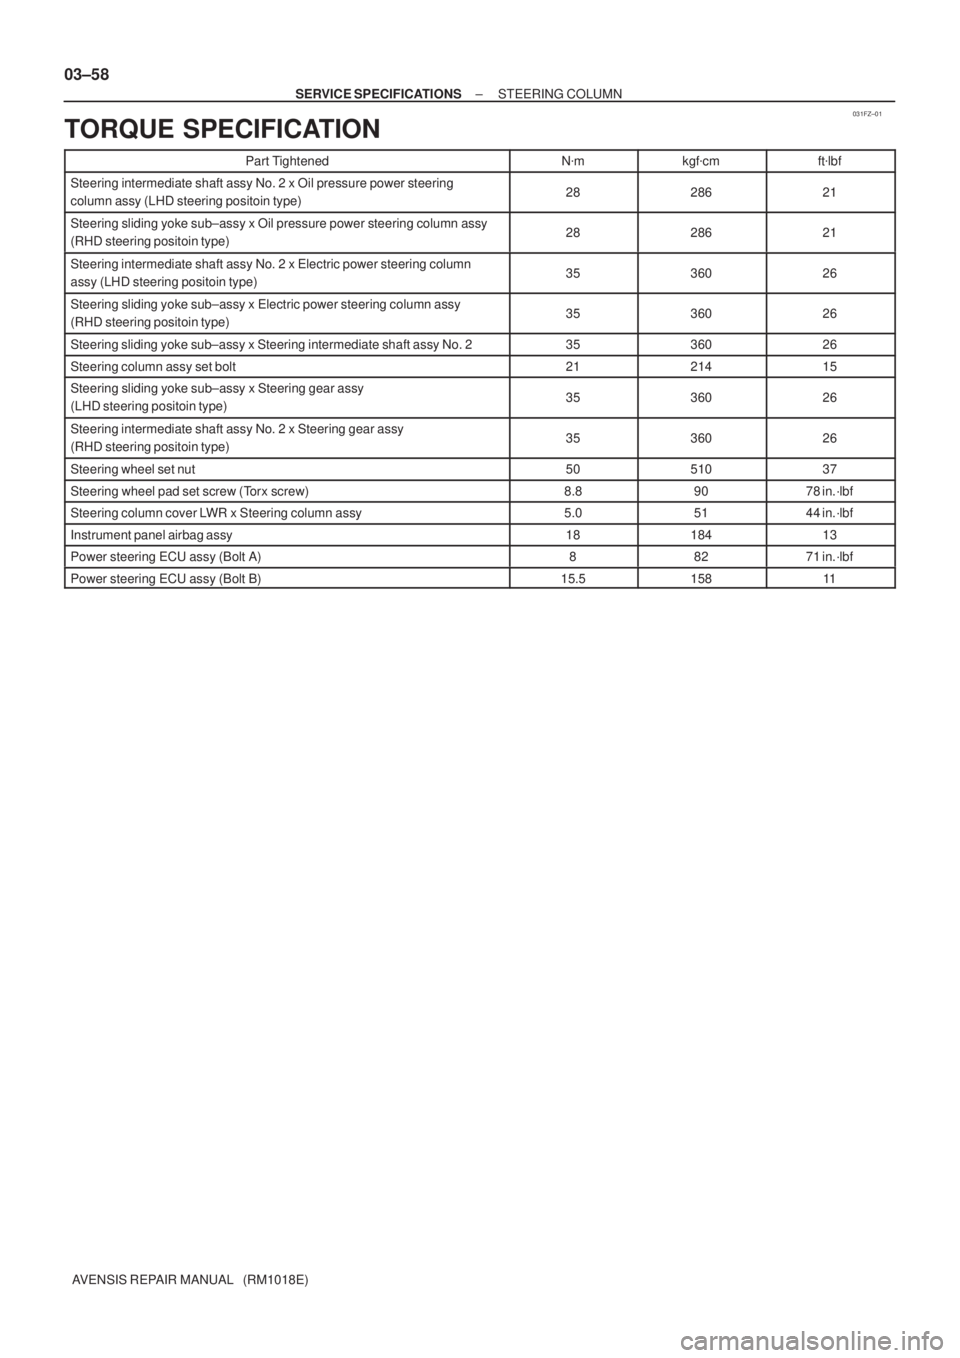 TOYOTA AVENSIS 2005  Service Repair Manual 031FZ±01
03±58
± SERVICE SPECIFICATIONSSTEERING COLUMN
AVENSIS REPAIR MANUAL   (RM1018E)
TORQUE SPECIFICATION
Part TightenedNmkgfcmftlbf
Steering intermediate shaft assy No. 2 x Oil pressure pow